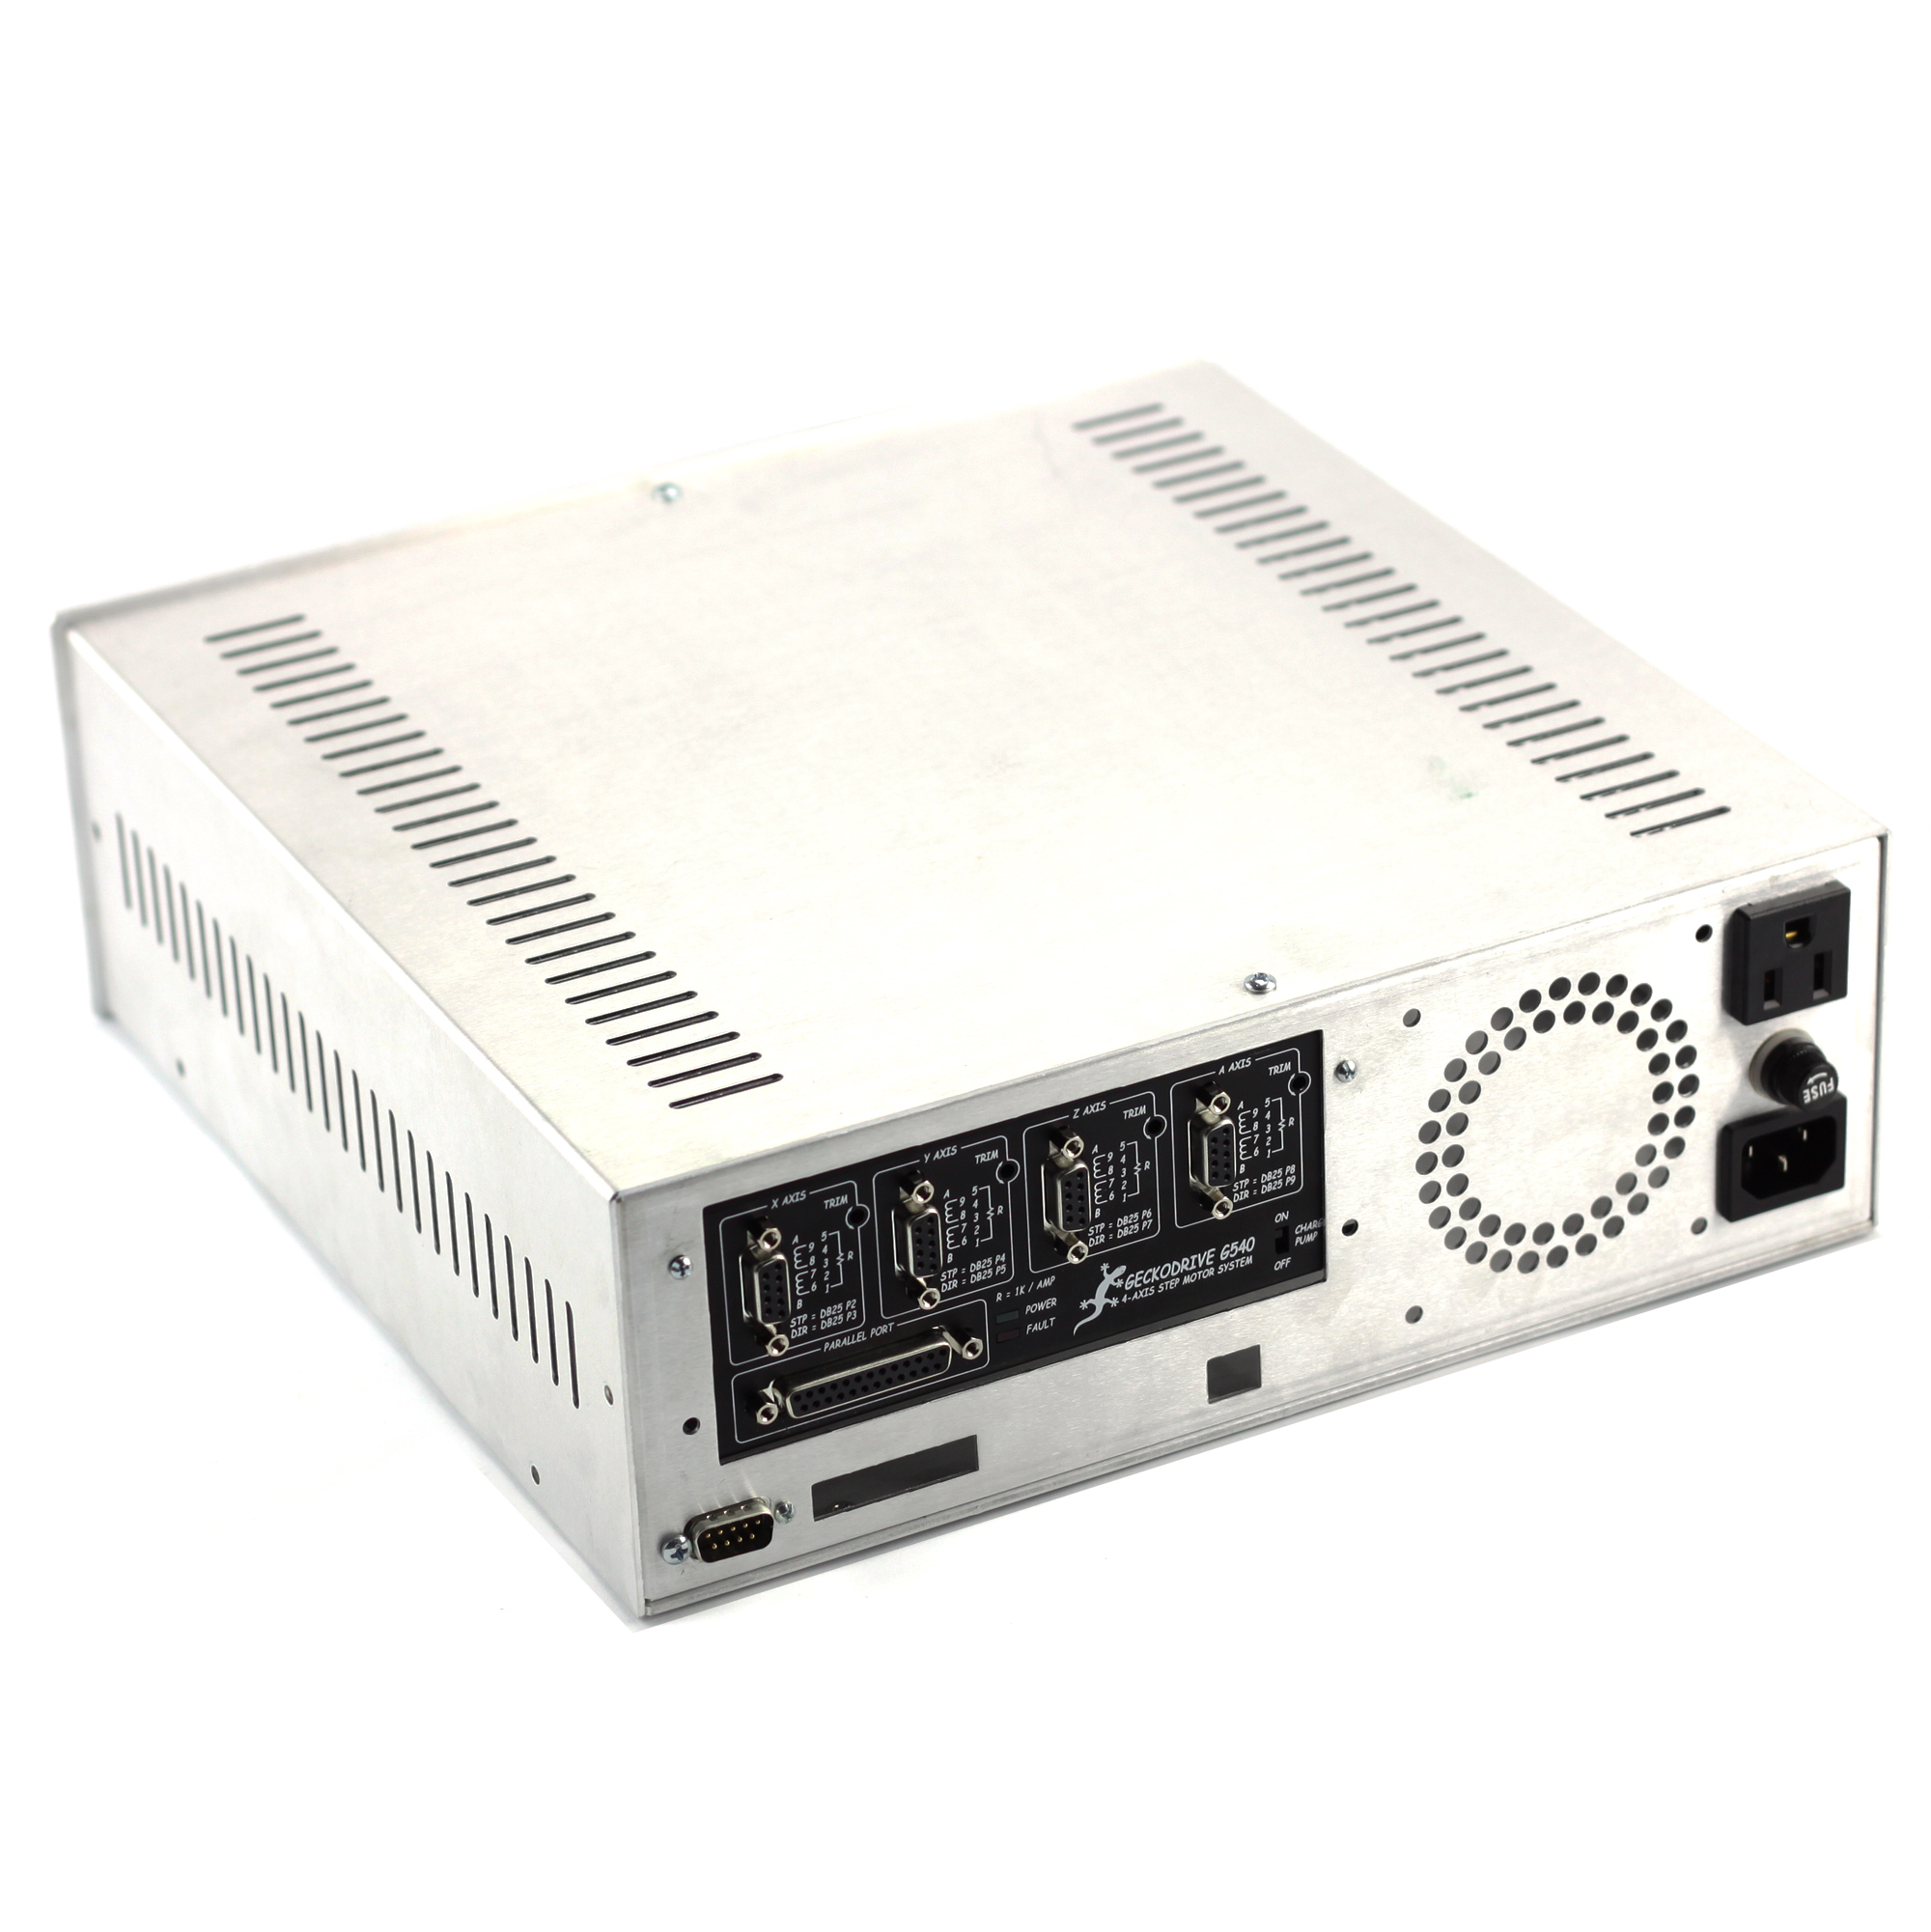 Gecko CNC G540 4-Axis Driver Controller 48V 400 watt Power Supply FAST SHIPPING 